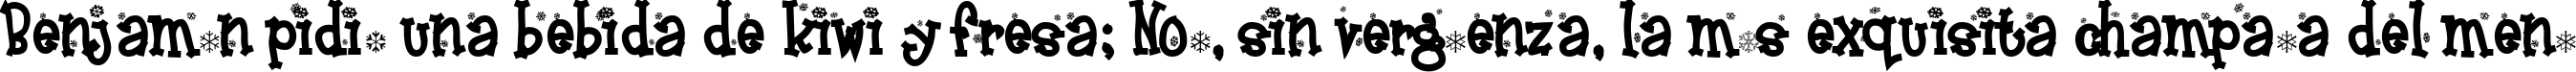 Пример написания шрифтом Frosty текста на испанском